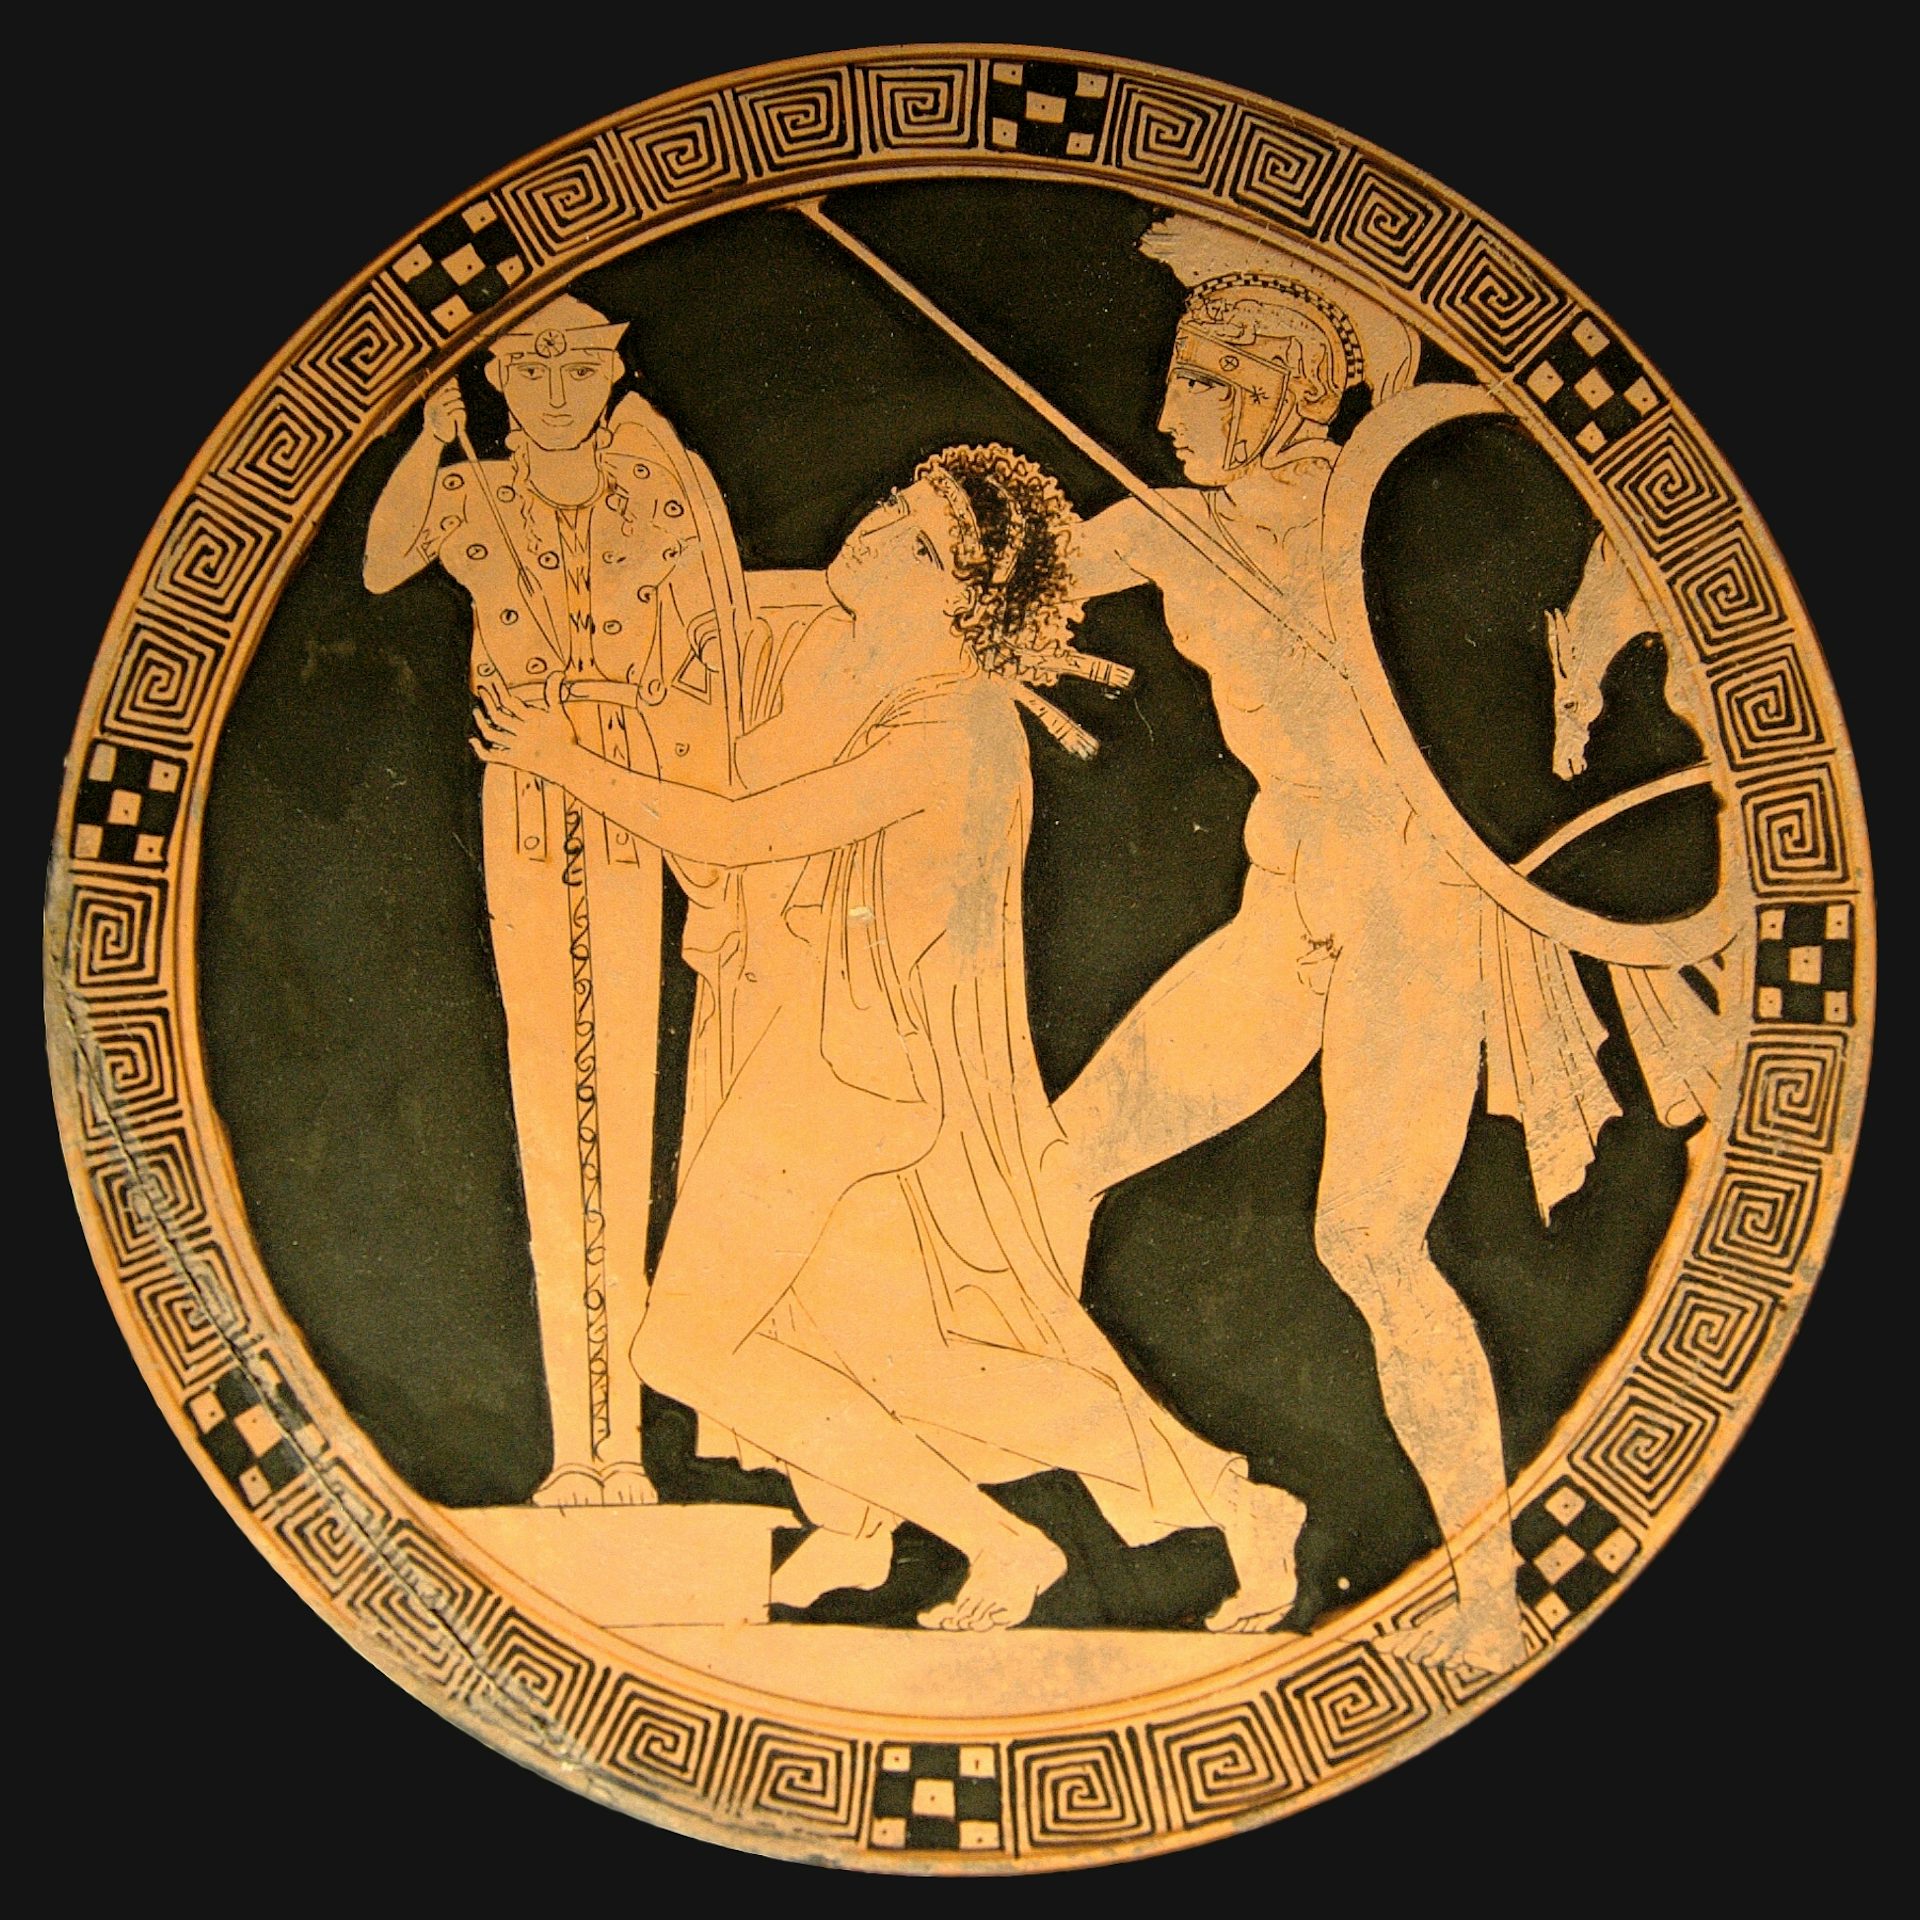 Vase painting of Ajax the Lesser raping Cassandra